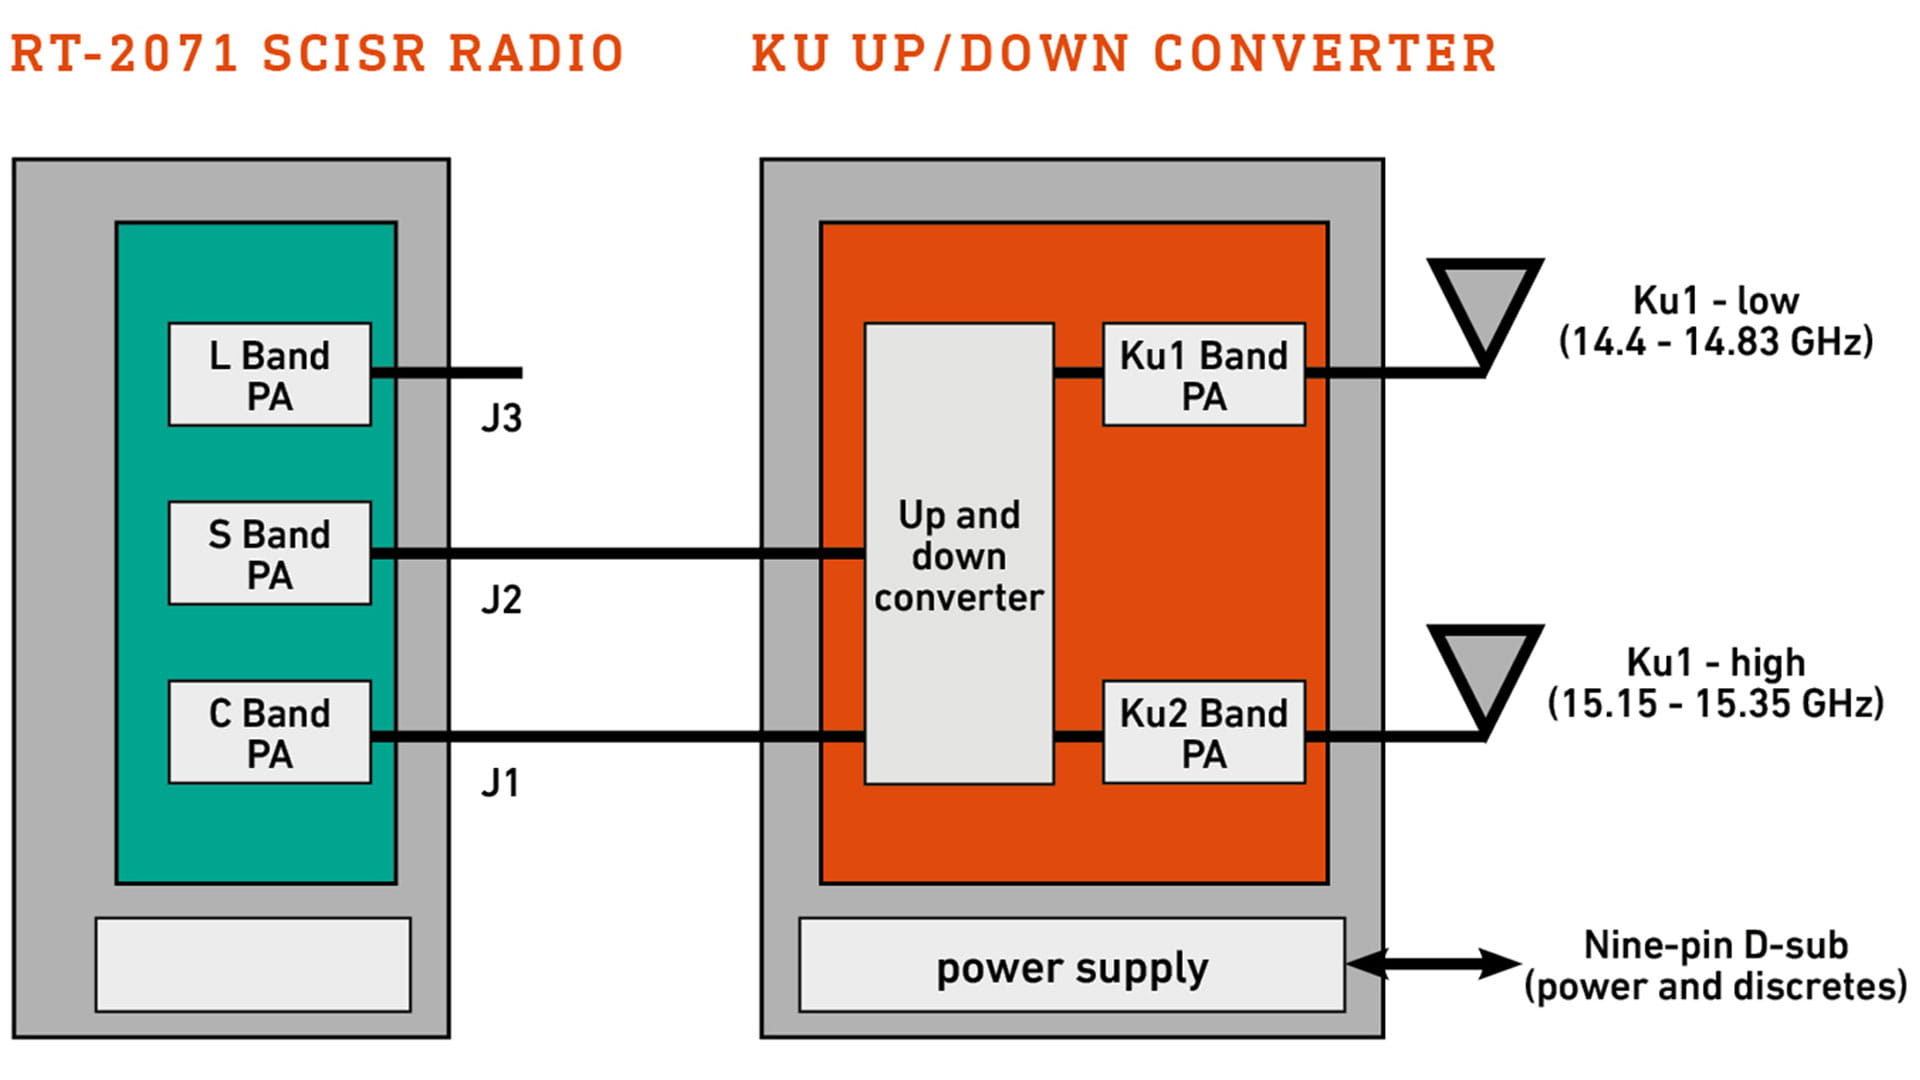 RC-2071 SCISR Radio Up/Down converter chart